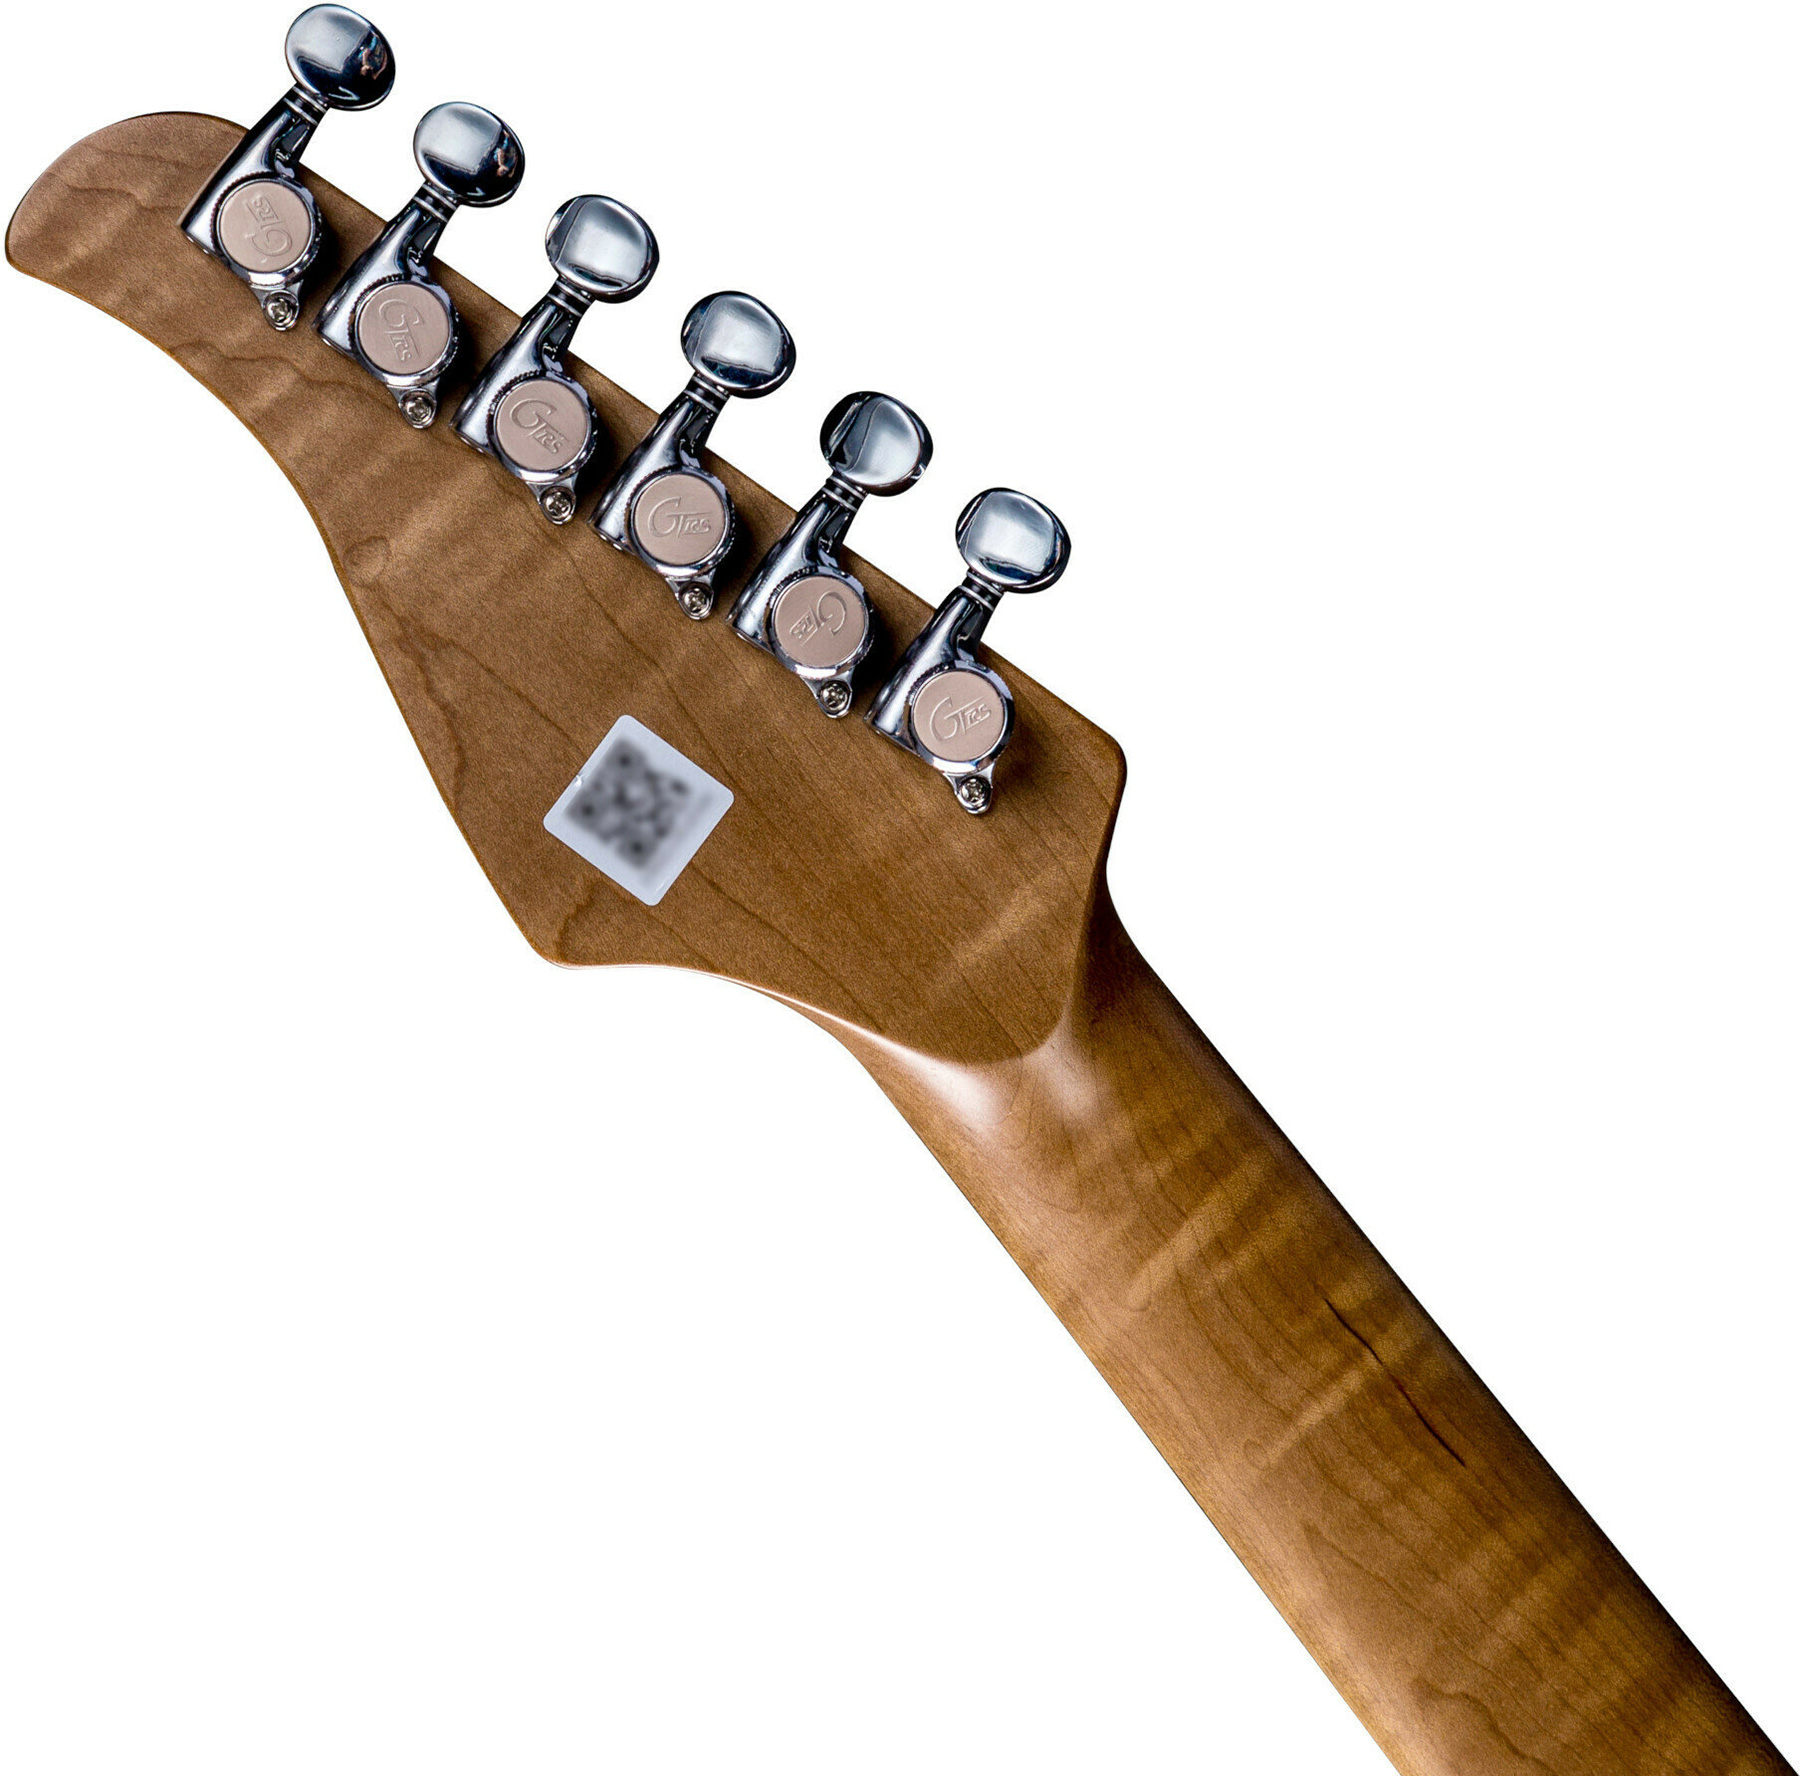 Mooer Gtrs P800 Pro Intelligent Guitar Hss Trem Rw - Mint Green - Modeling guitar - Variation 4